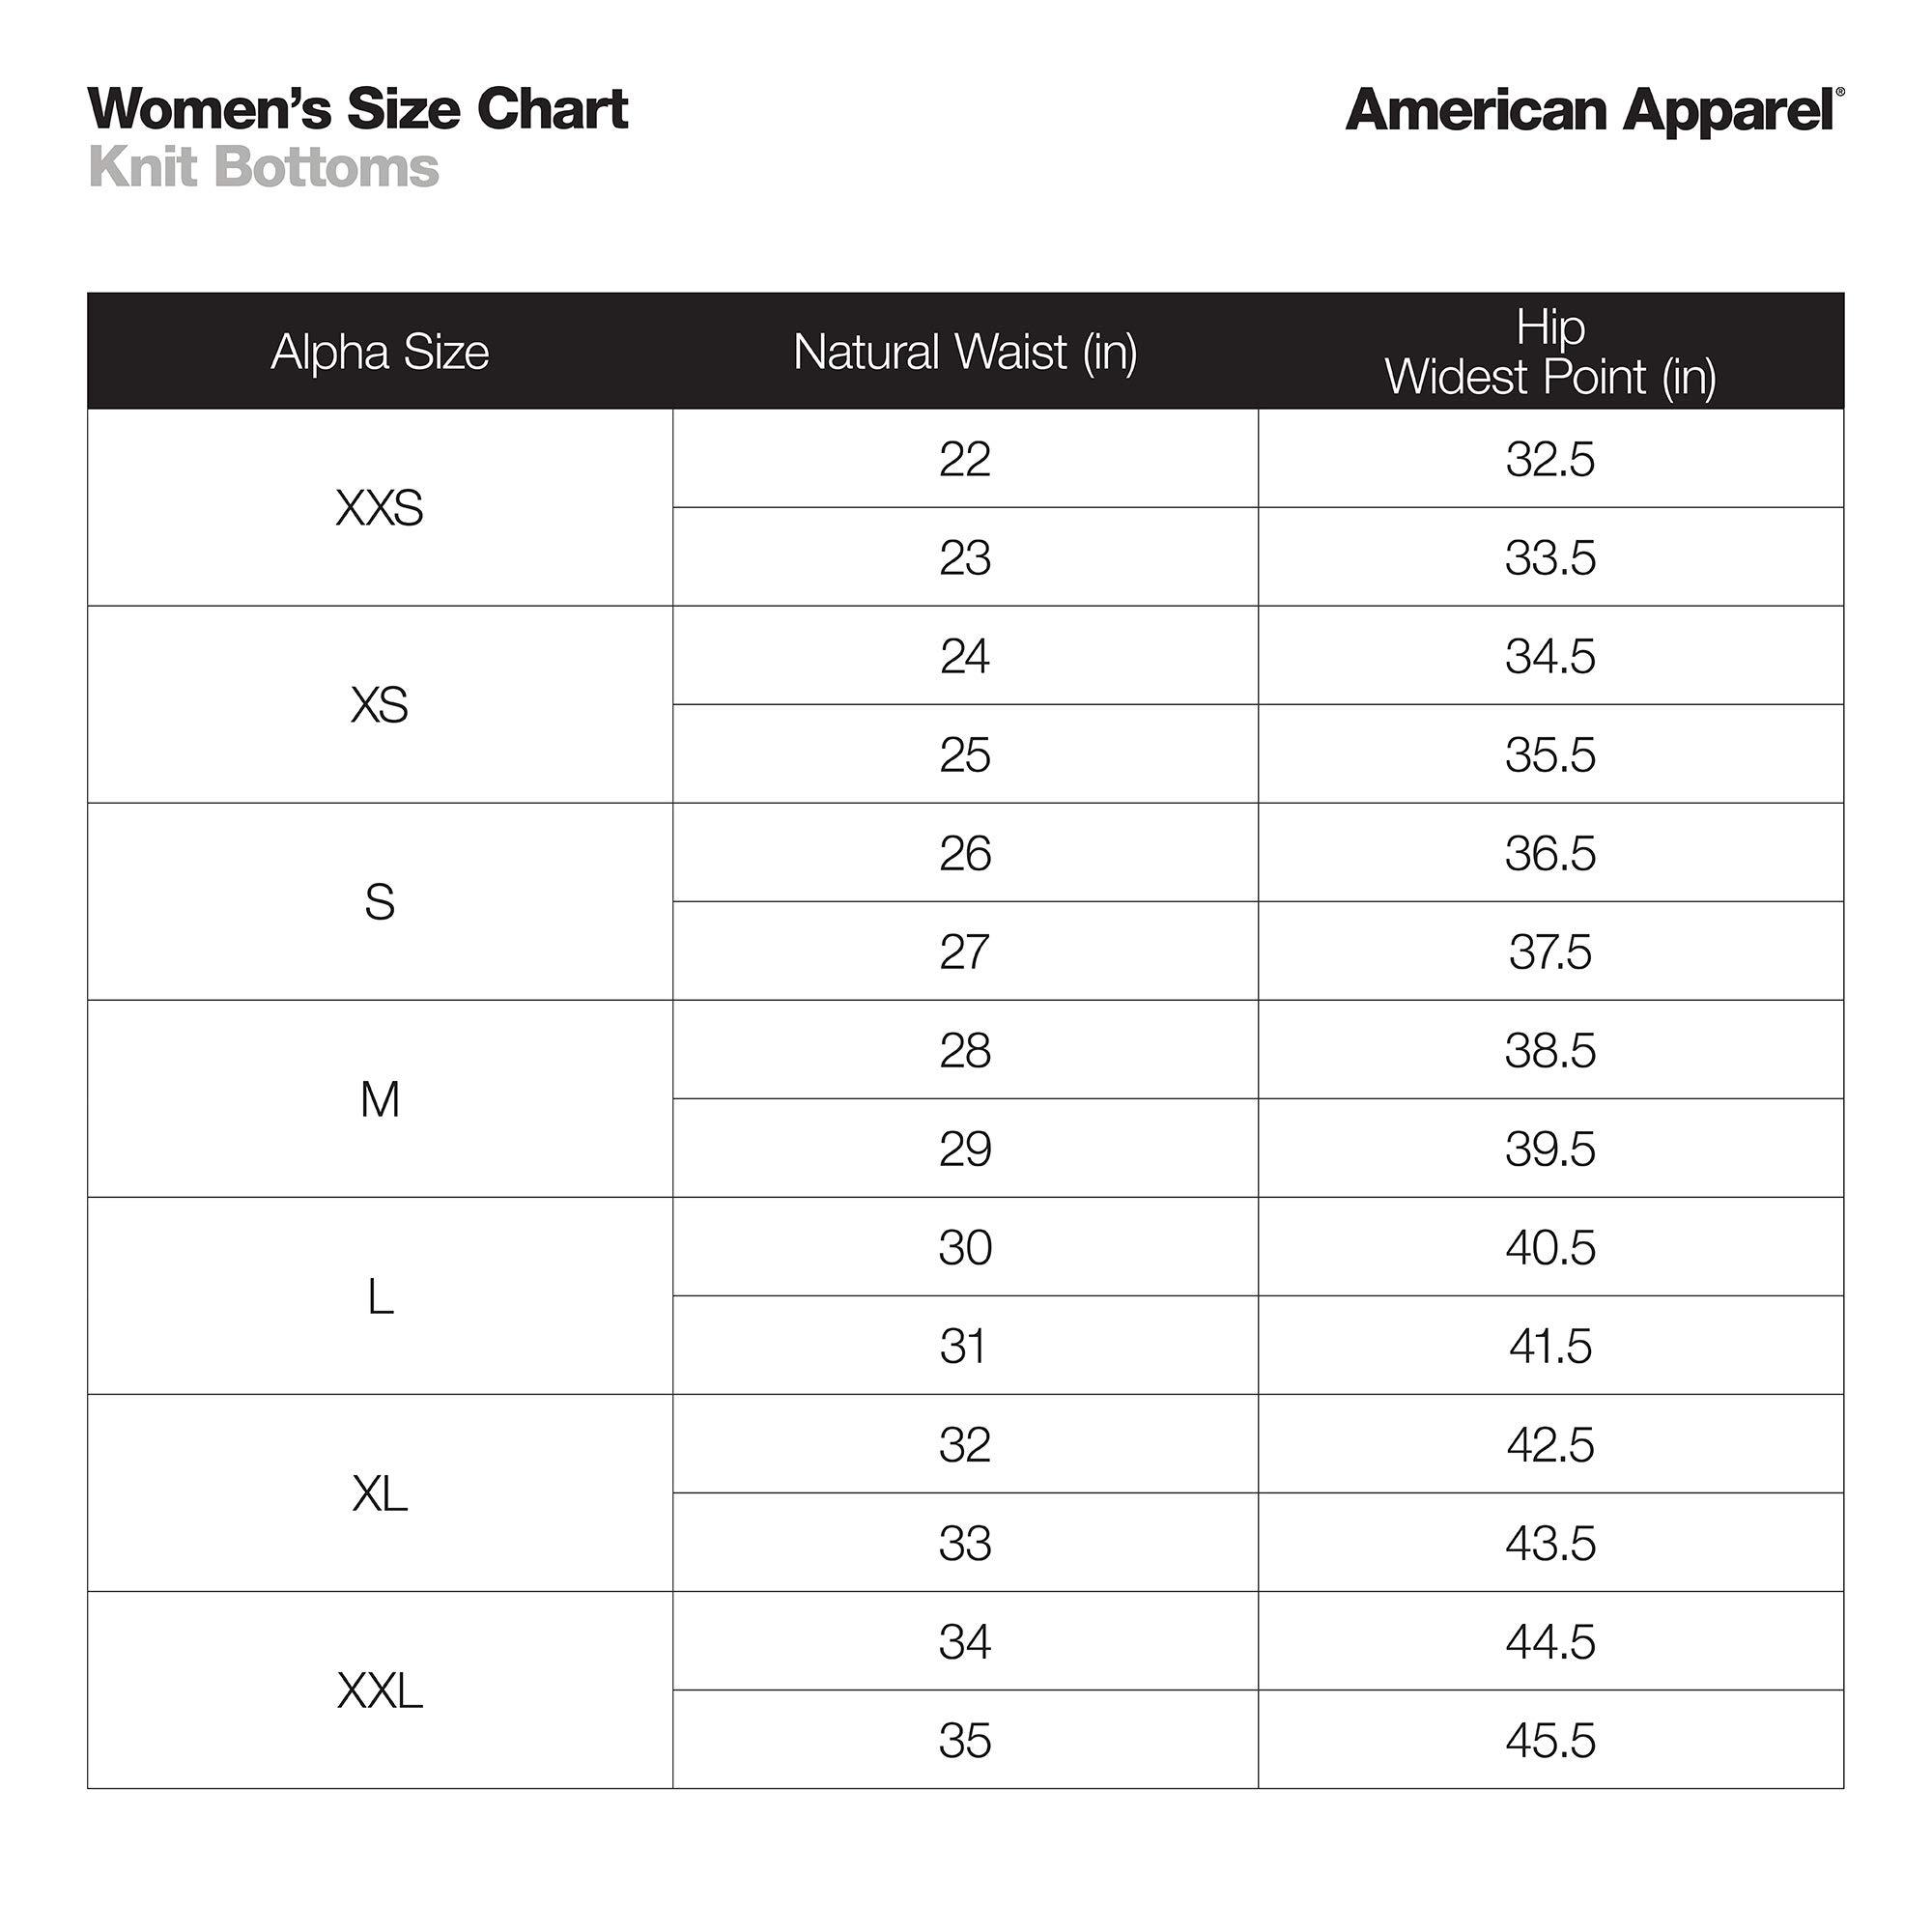 American Apparel Women's Denim Button Front A-line Mini Skirt